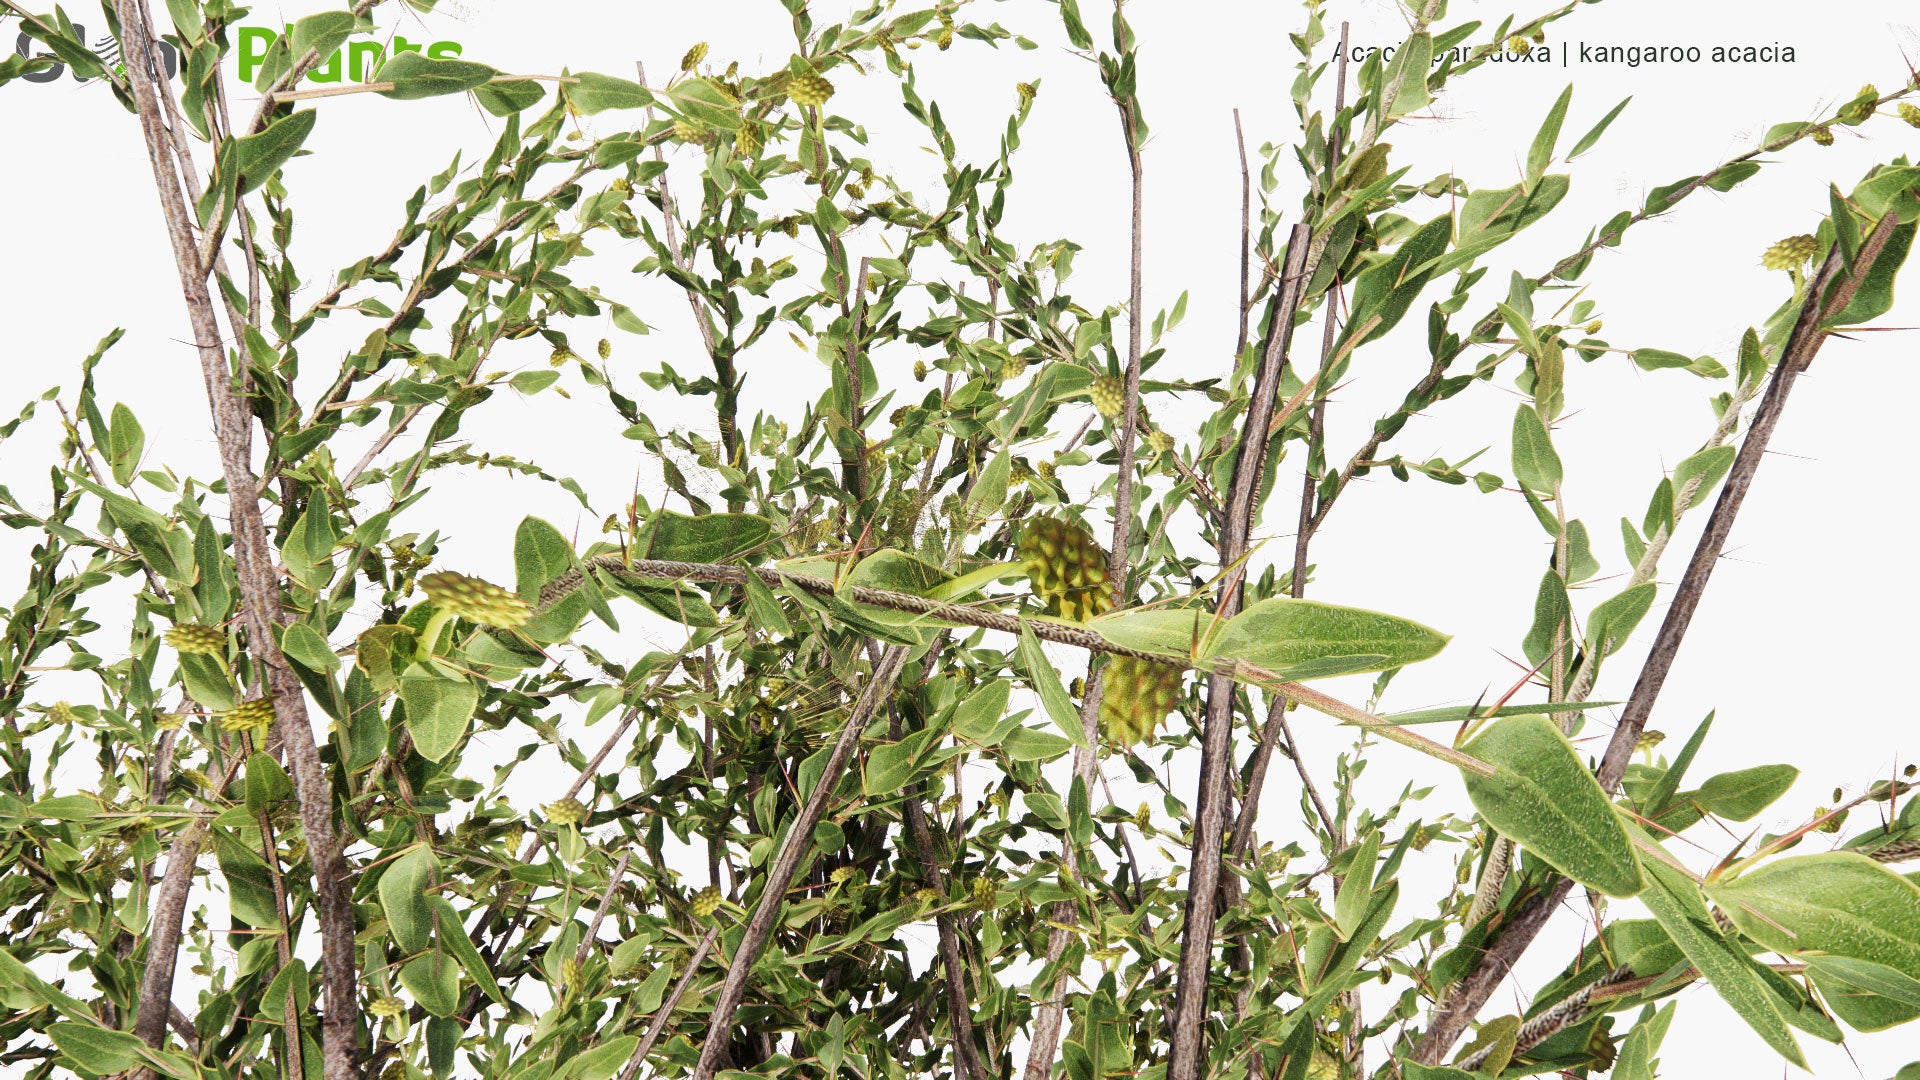 Low Poly Acacia Paradoxa - Kangaroo Acacia, Kangaroo Thorn, Prickly Wattle, Hedge Wattle (3D Model)